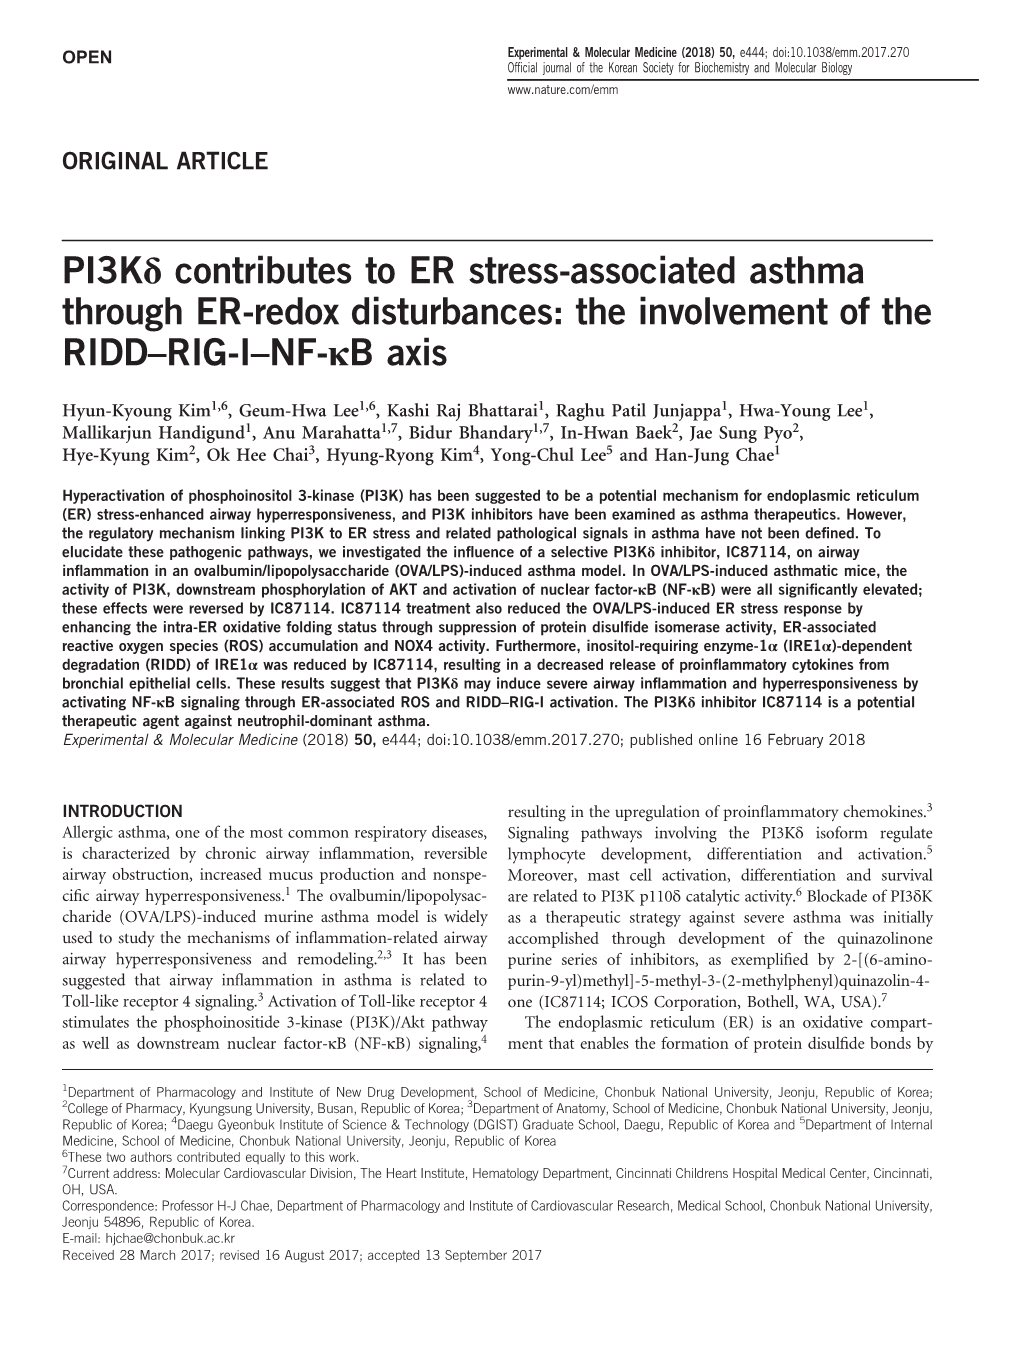 Pi3kδ Contributes to ER Stress-Associated Asthma Through ER-Redox Disturbances: the Involvement of the RIDD–RIG-I–NF-Κb Ax